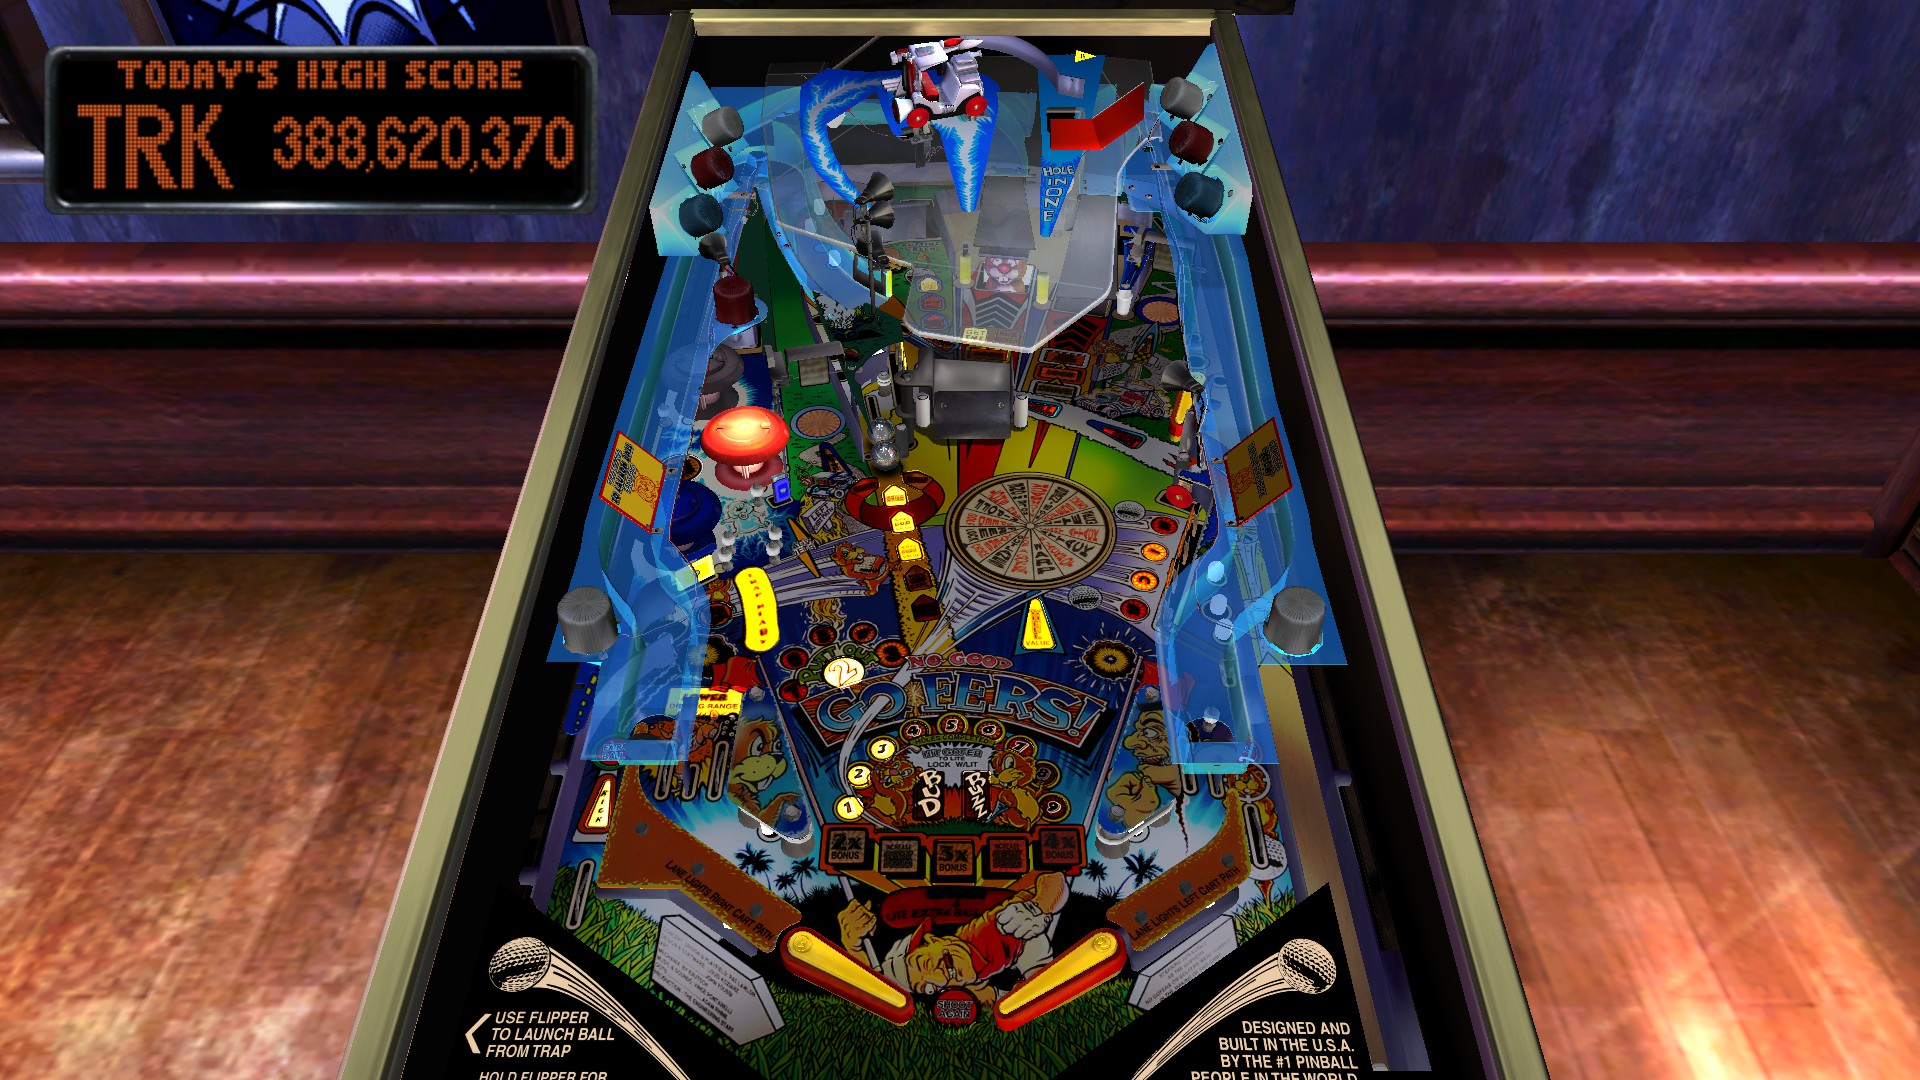 TheTrickster: Pinball Arcade: No Good Goofers (PC) 388,620,370 points on 2015-11-28 02:34:57